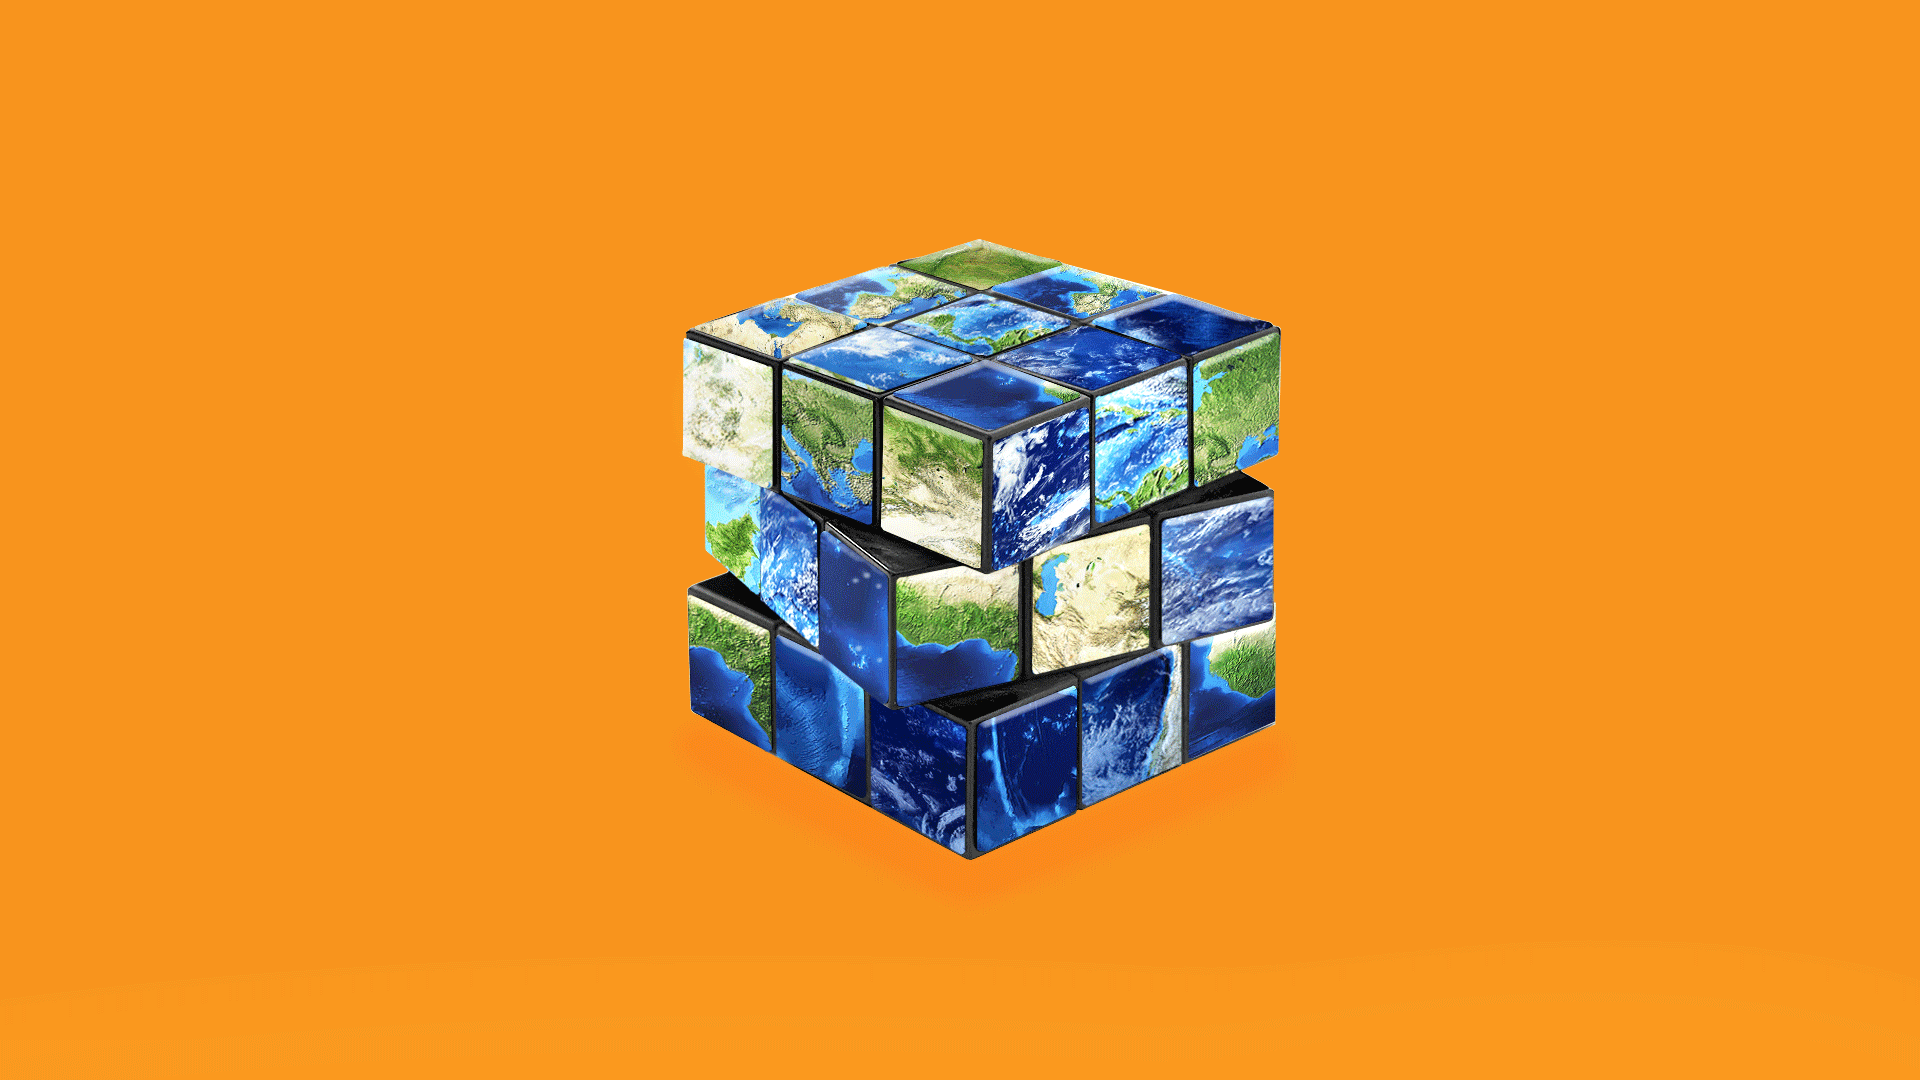 A rubix cube made to look like a globe.